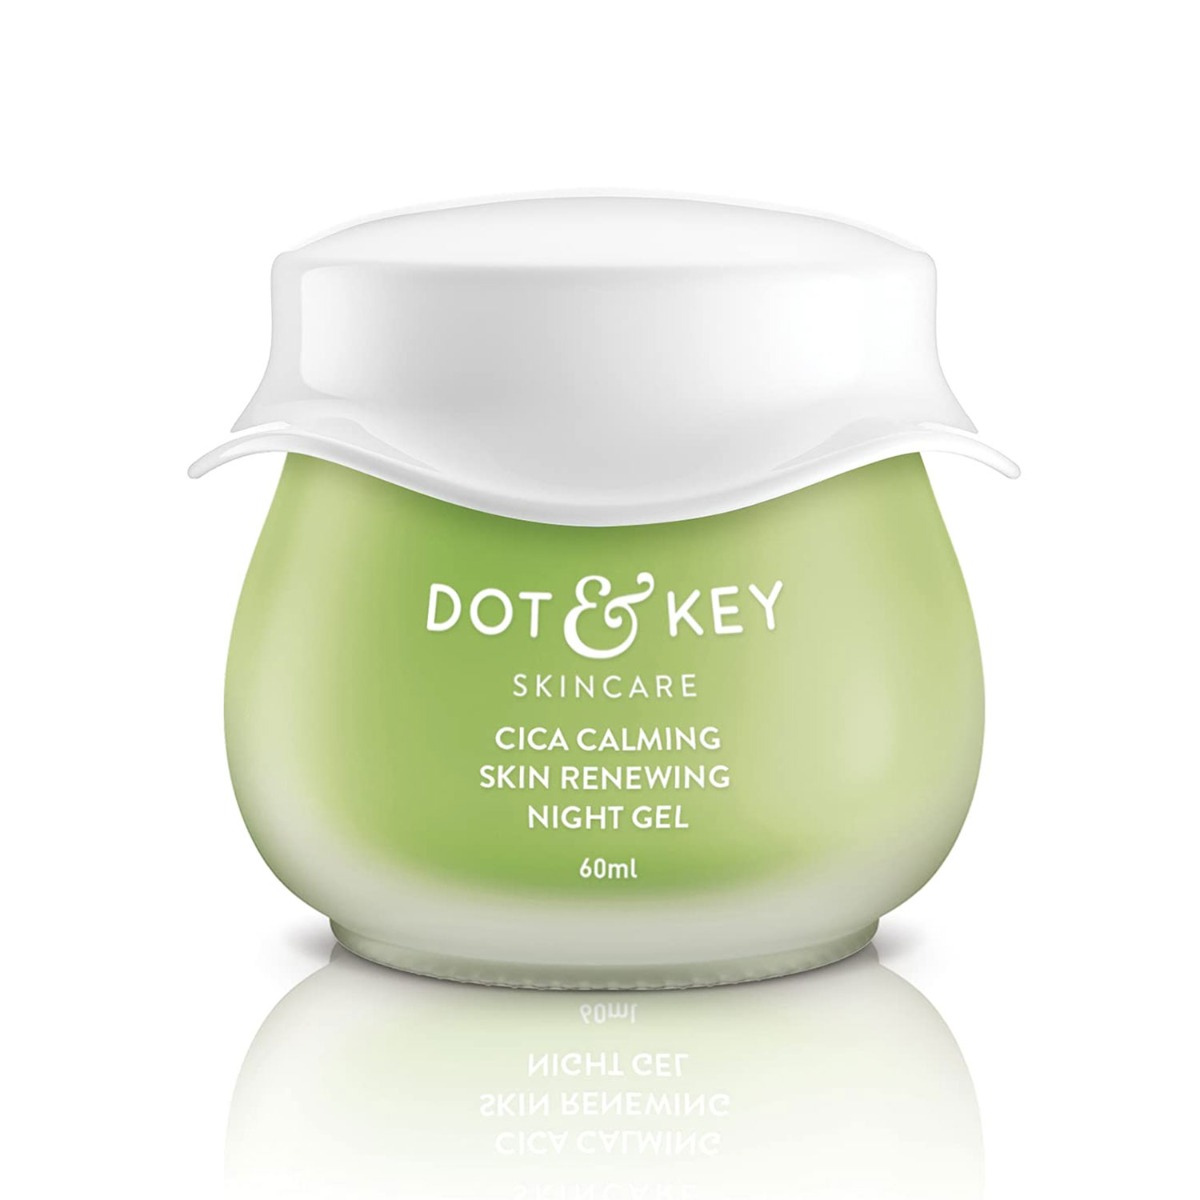 Dot & Key Cica Calming Skin Renewing Night Gel, 60ml